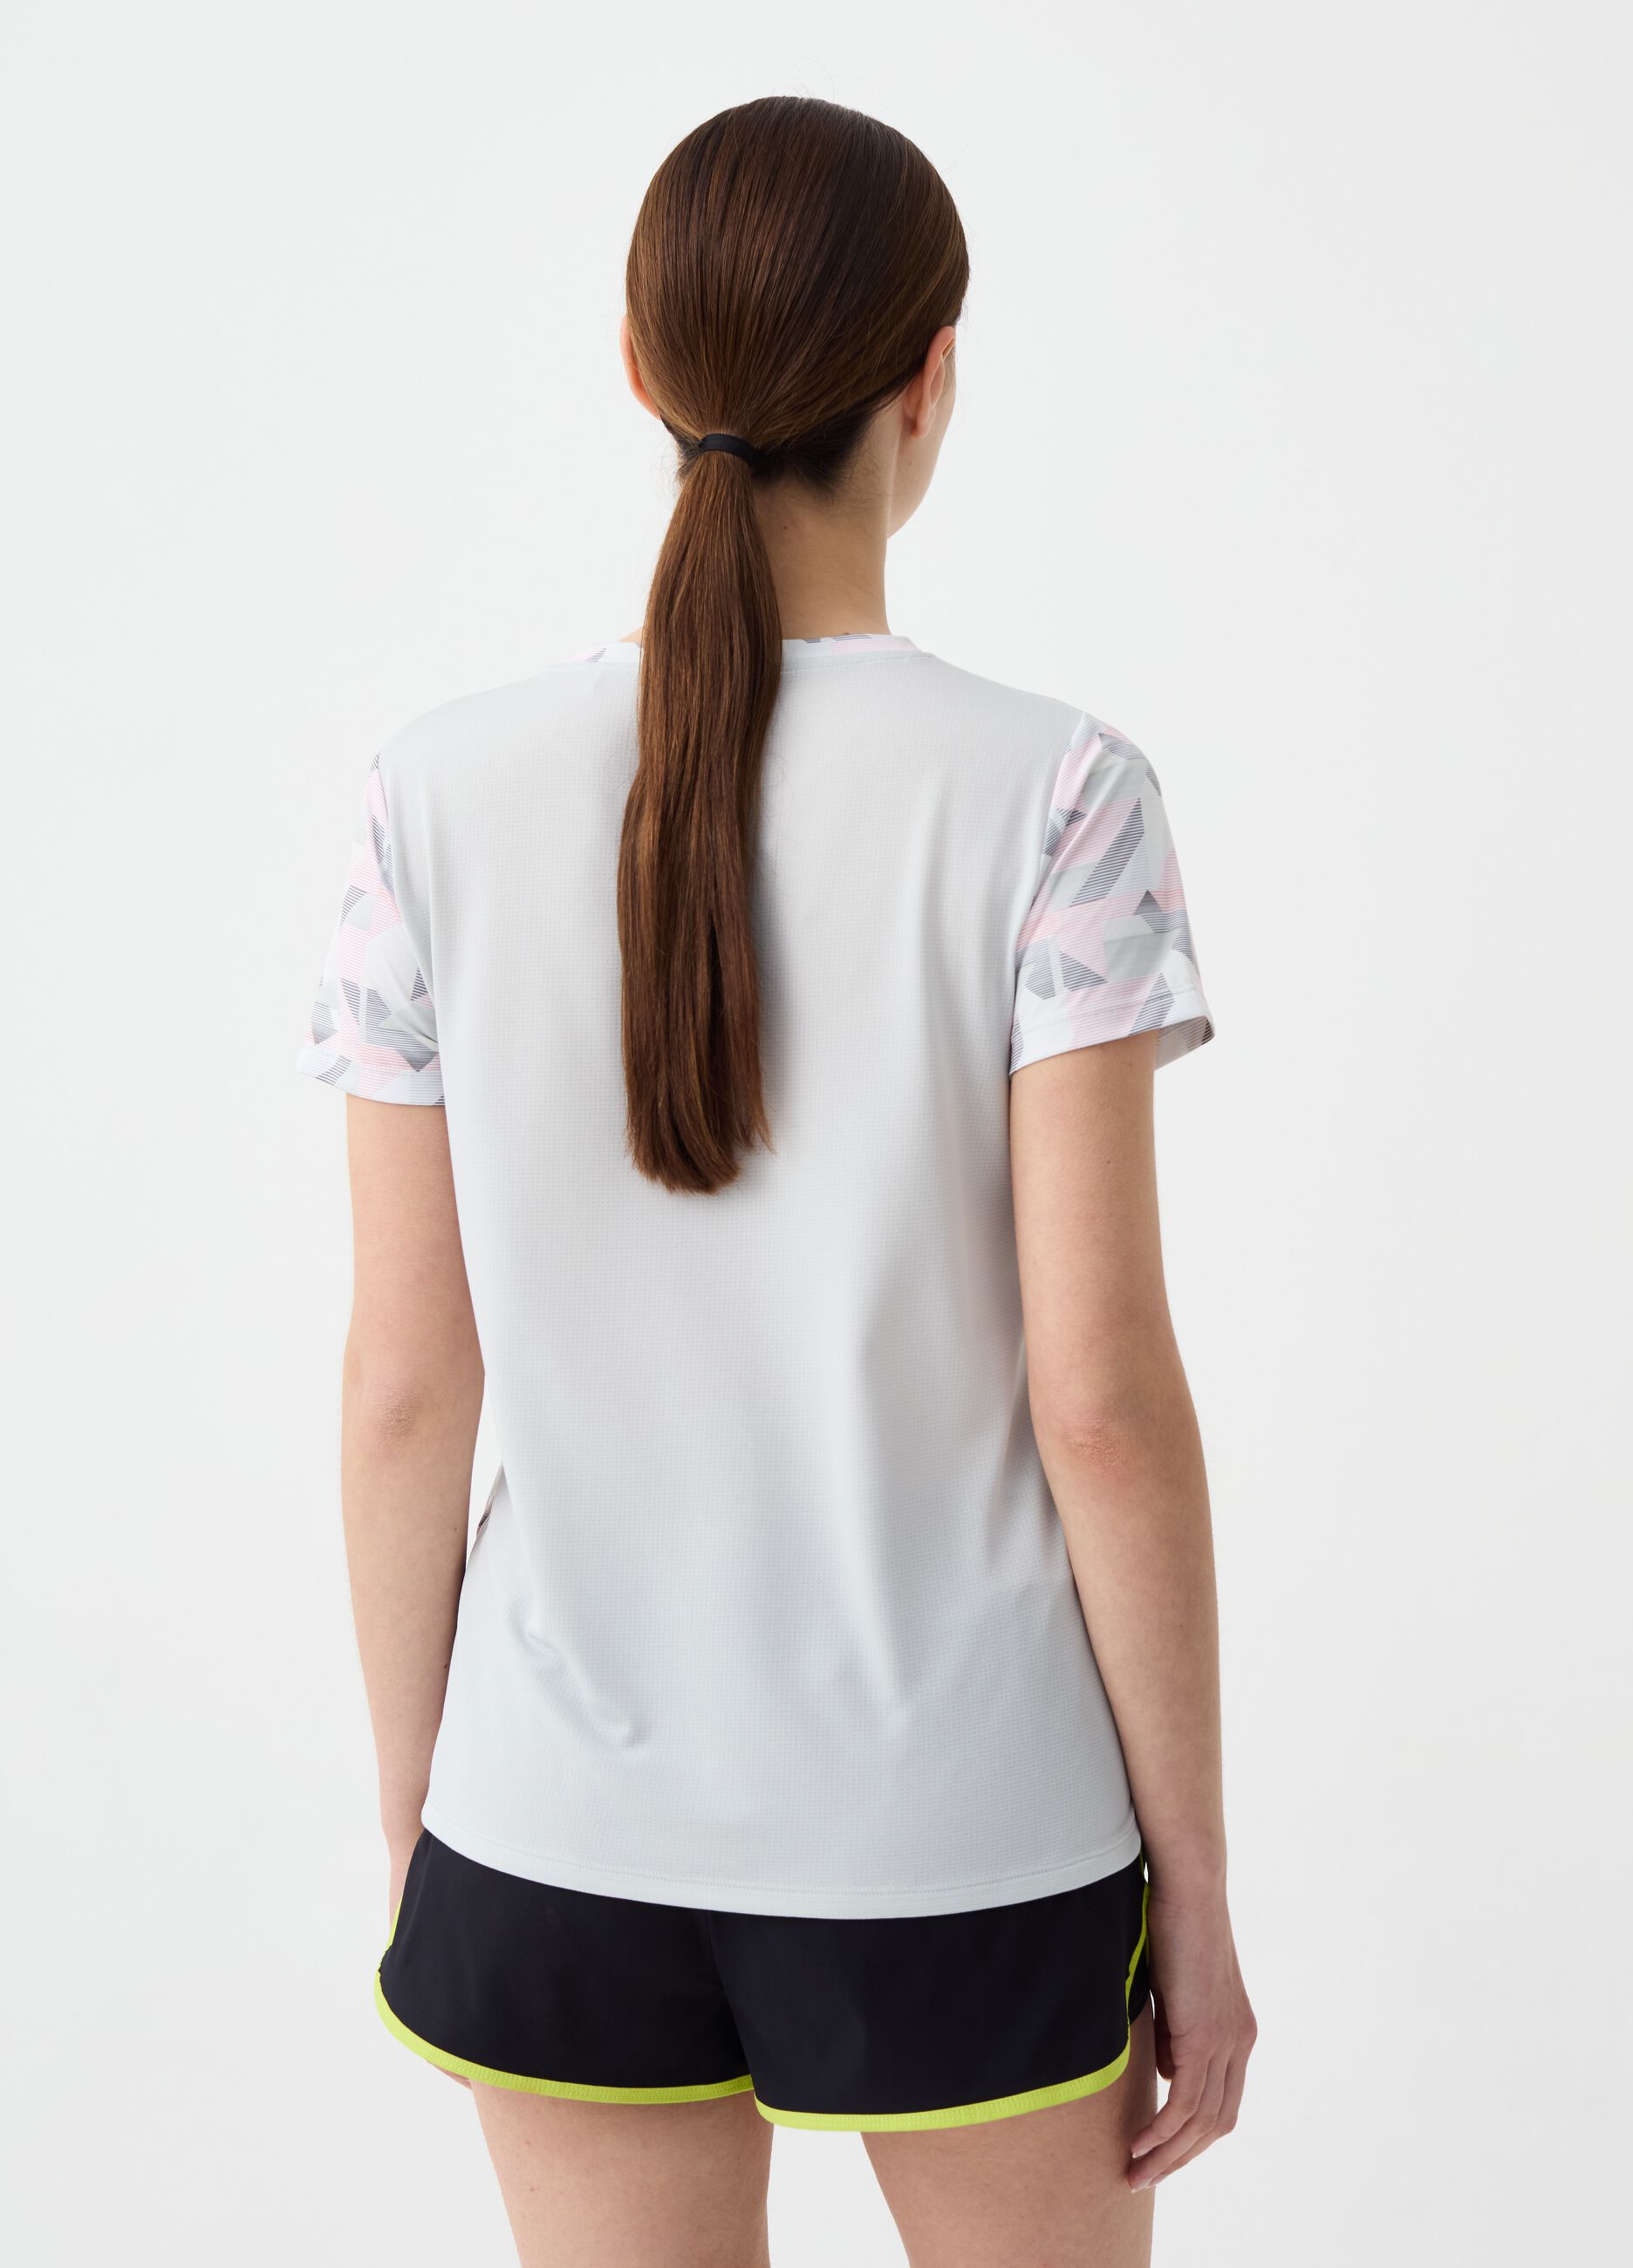 Slazenger tennis T-shirt with print